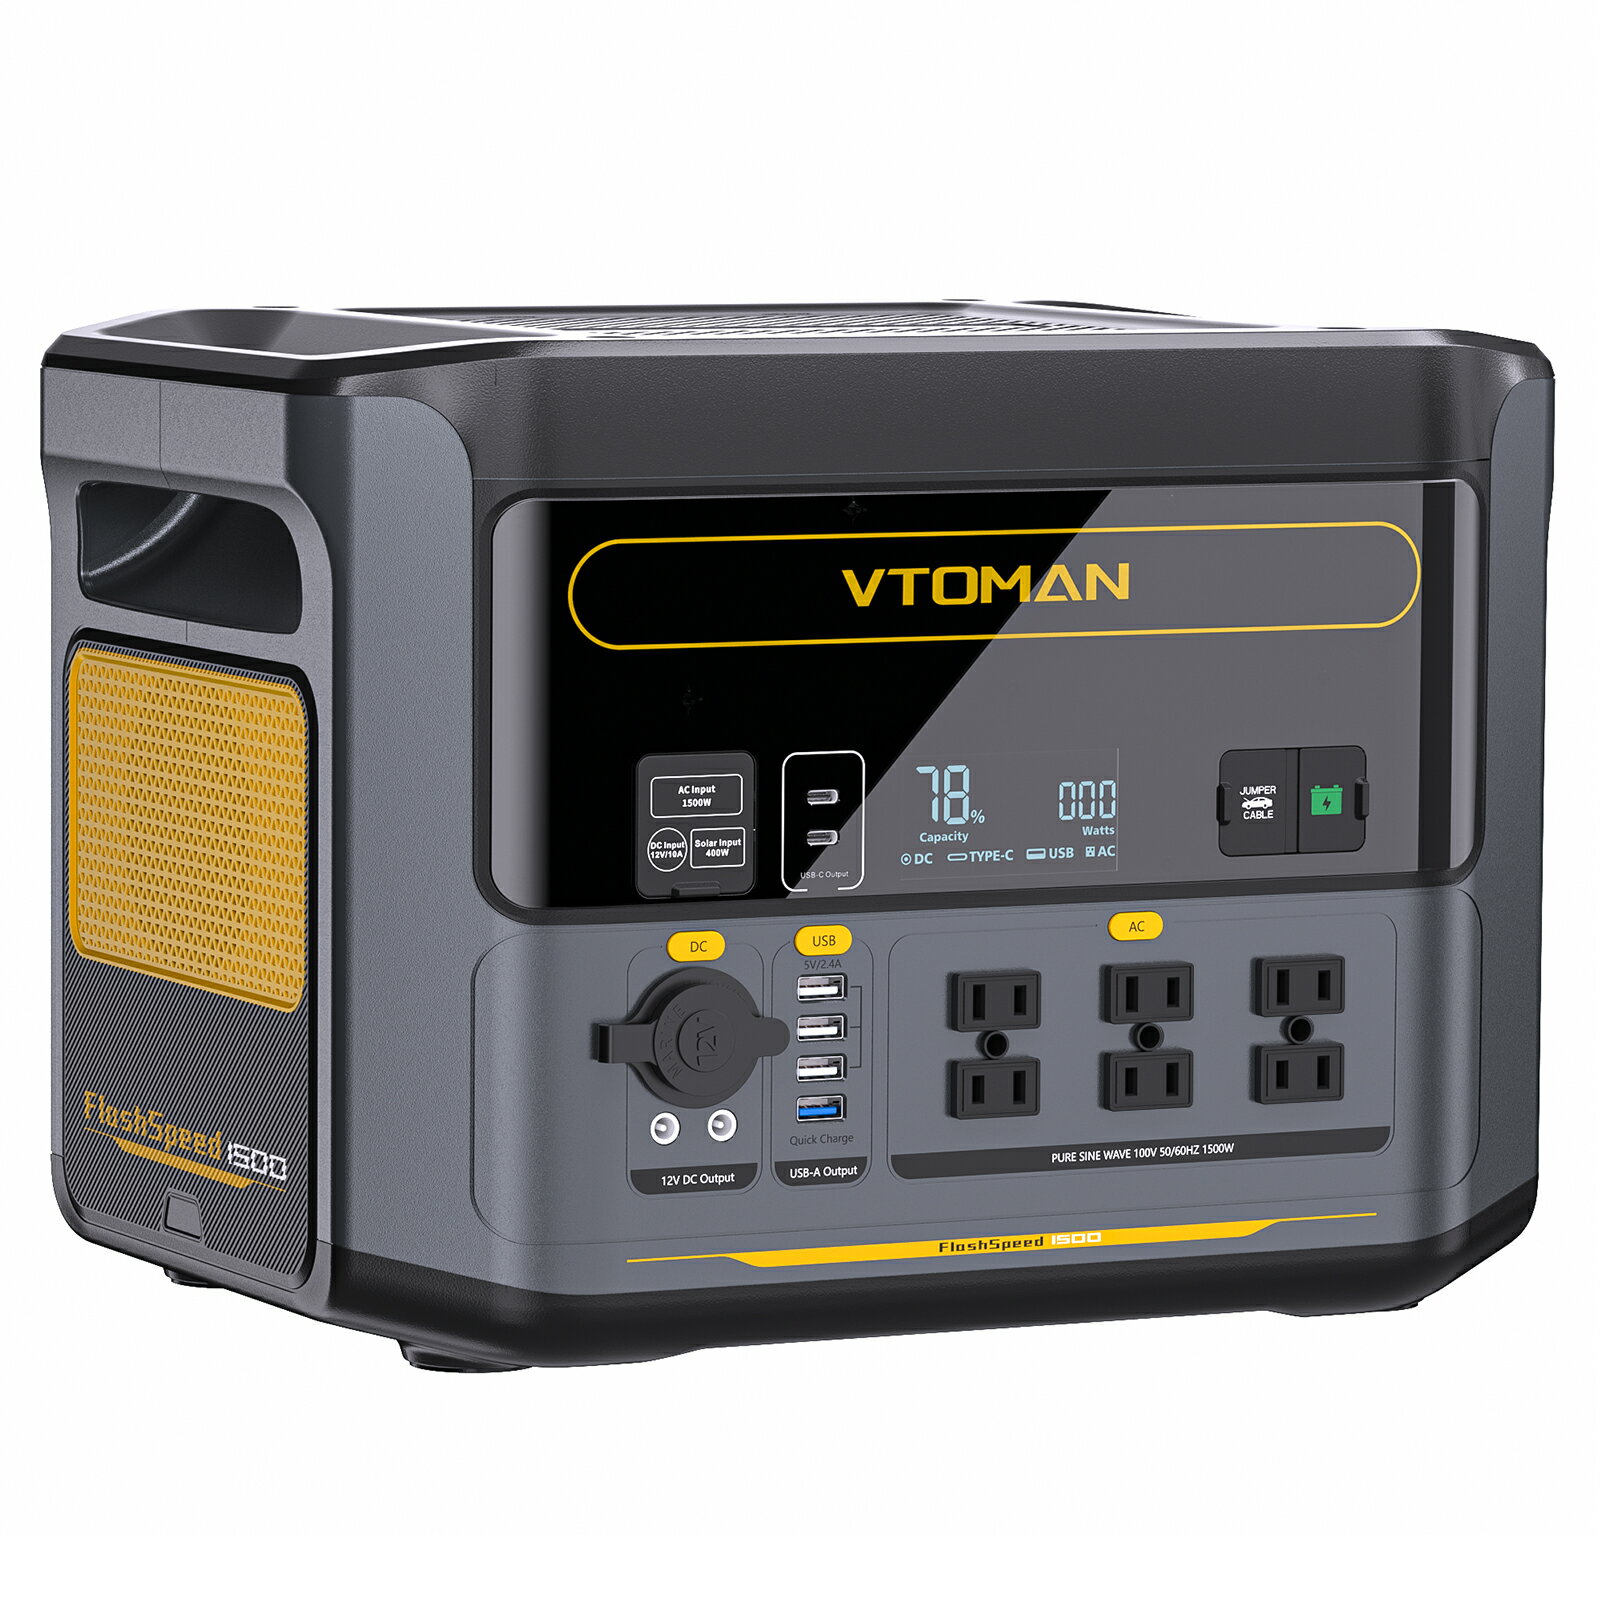 VTOMAN flashspeed1500 ポータブル電源 